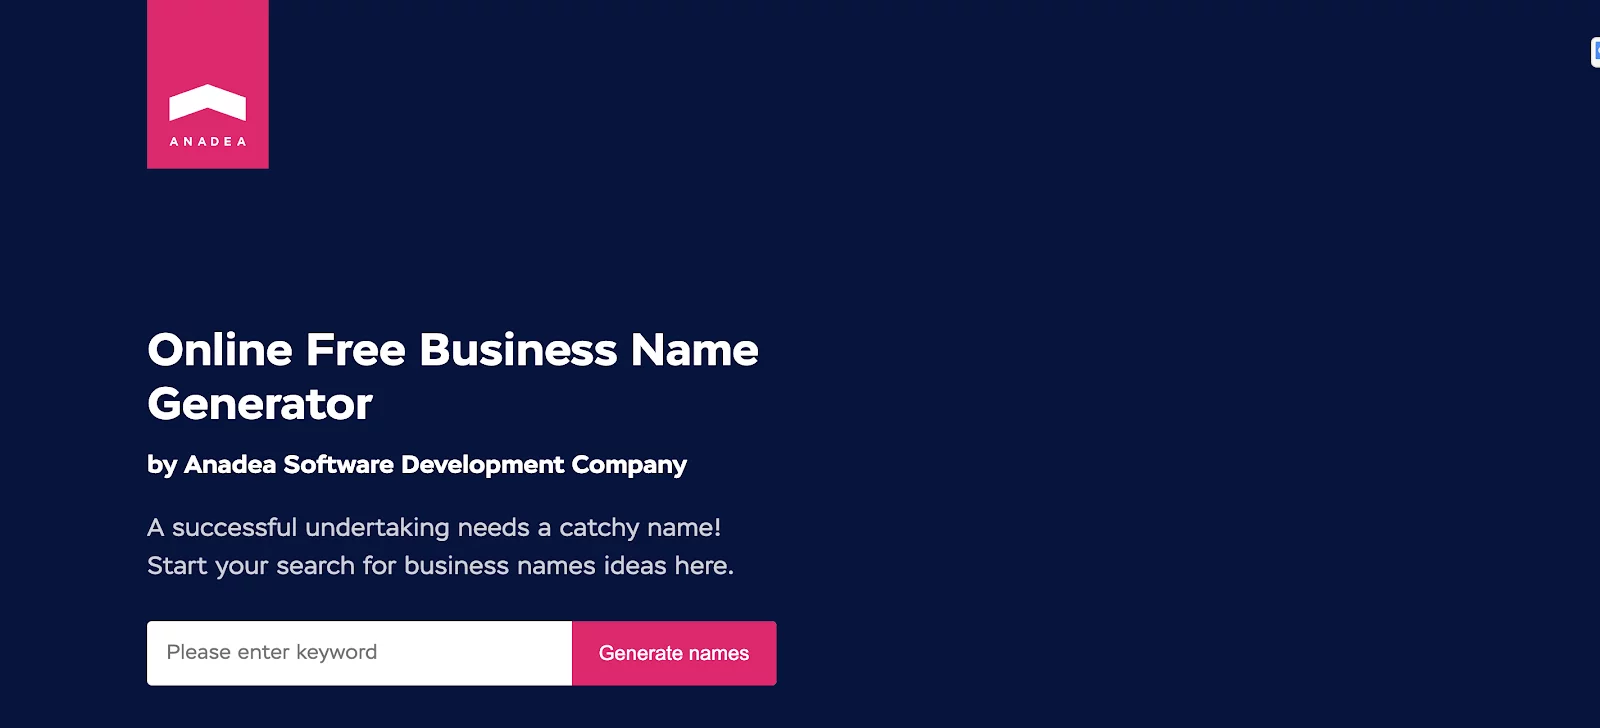 Anedea Business Name Generator